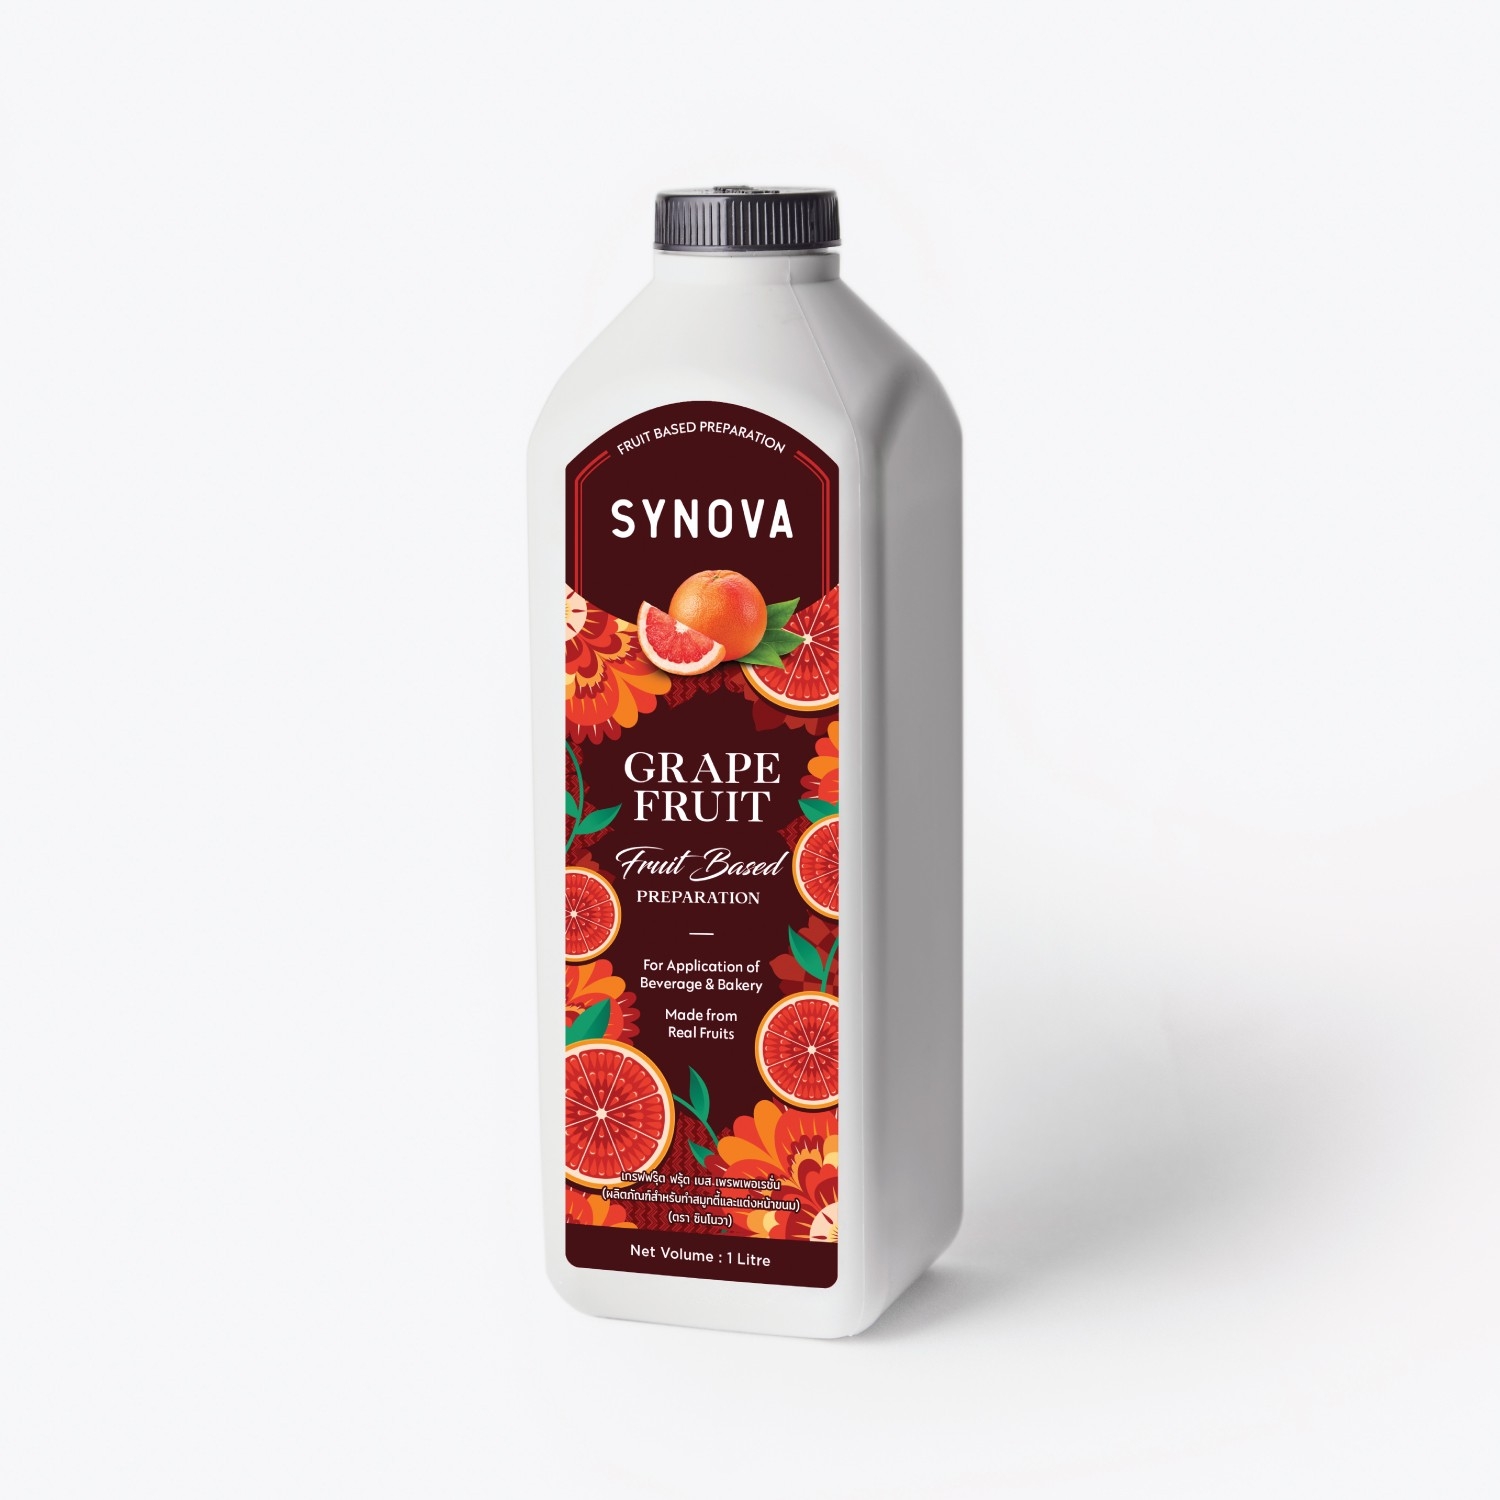 SYNOVA Grapefruit Fruit Based Preparation (Bottle)